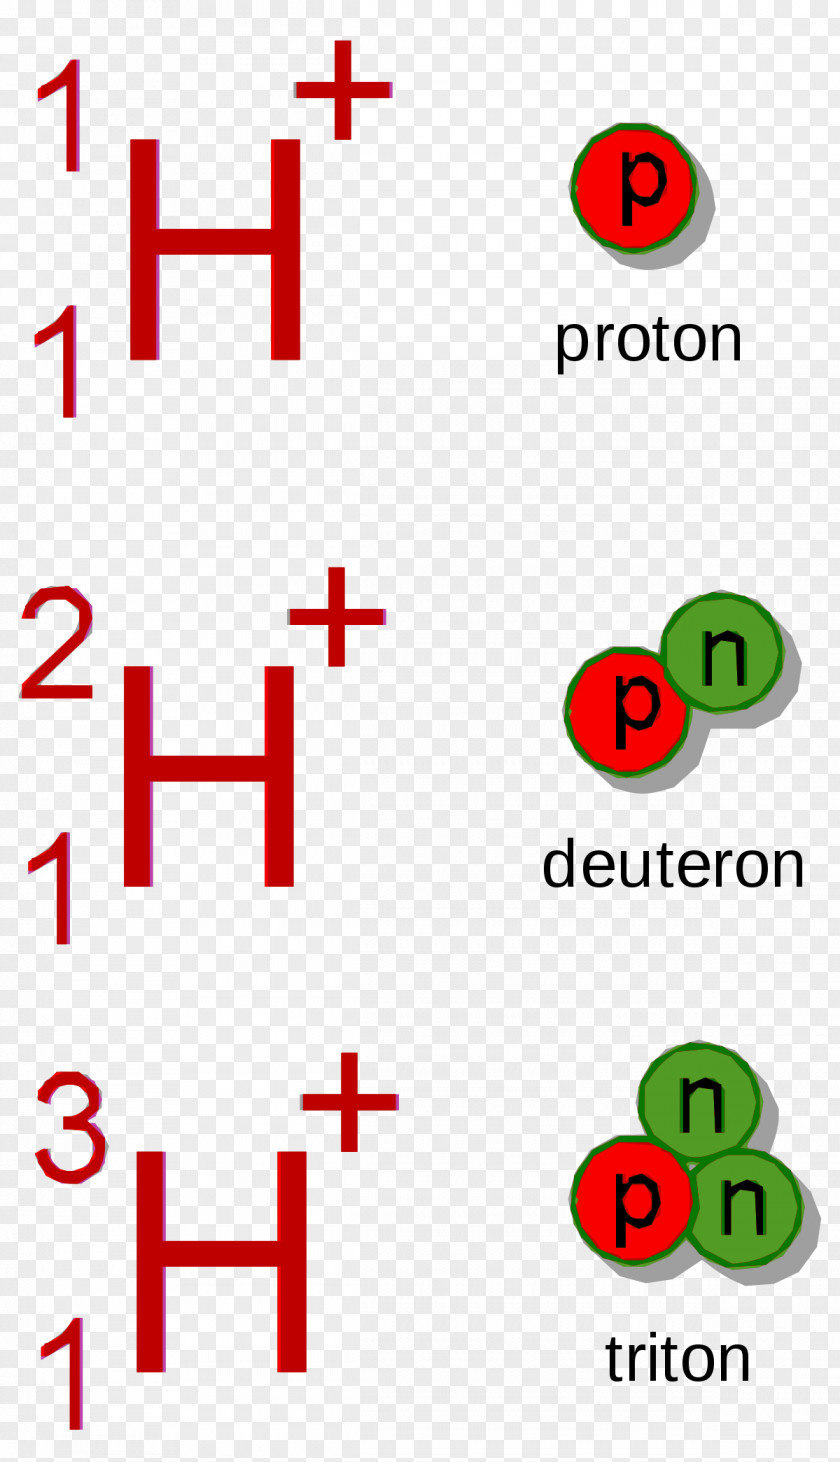 Symbol Deitrons Hydron Proton Hydrogen Triiton PNG